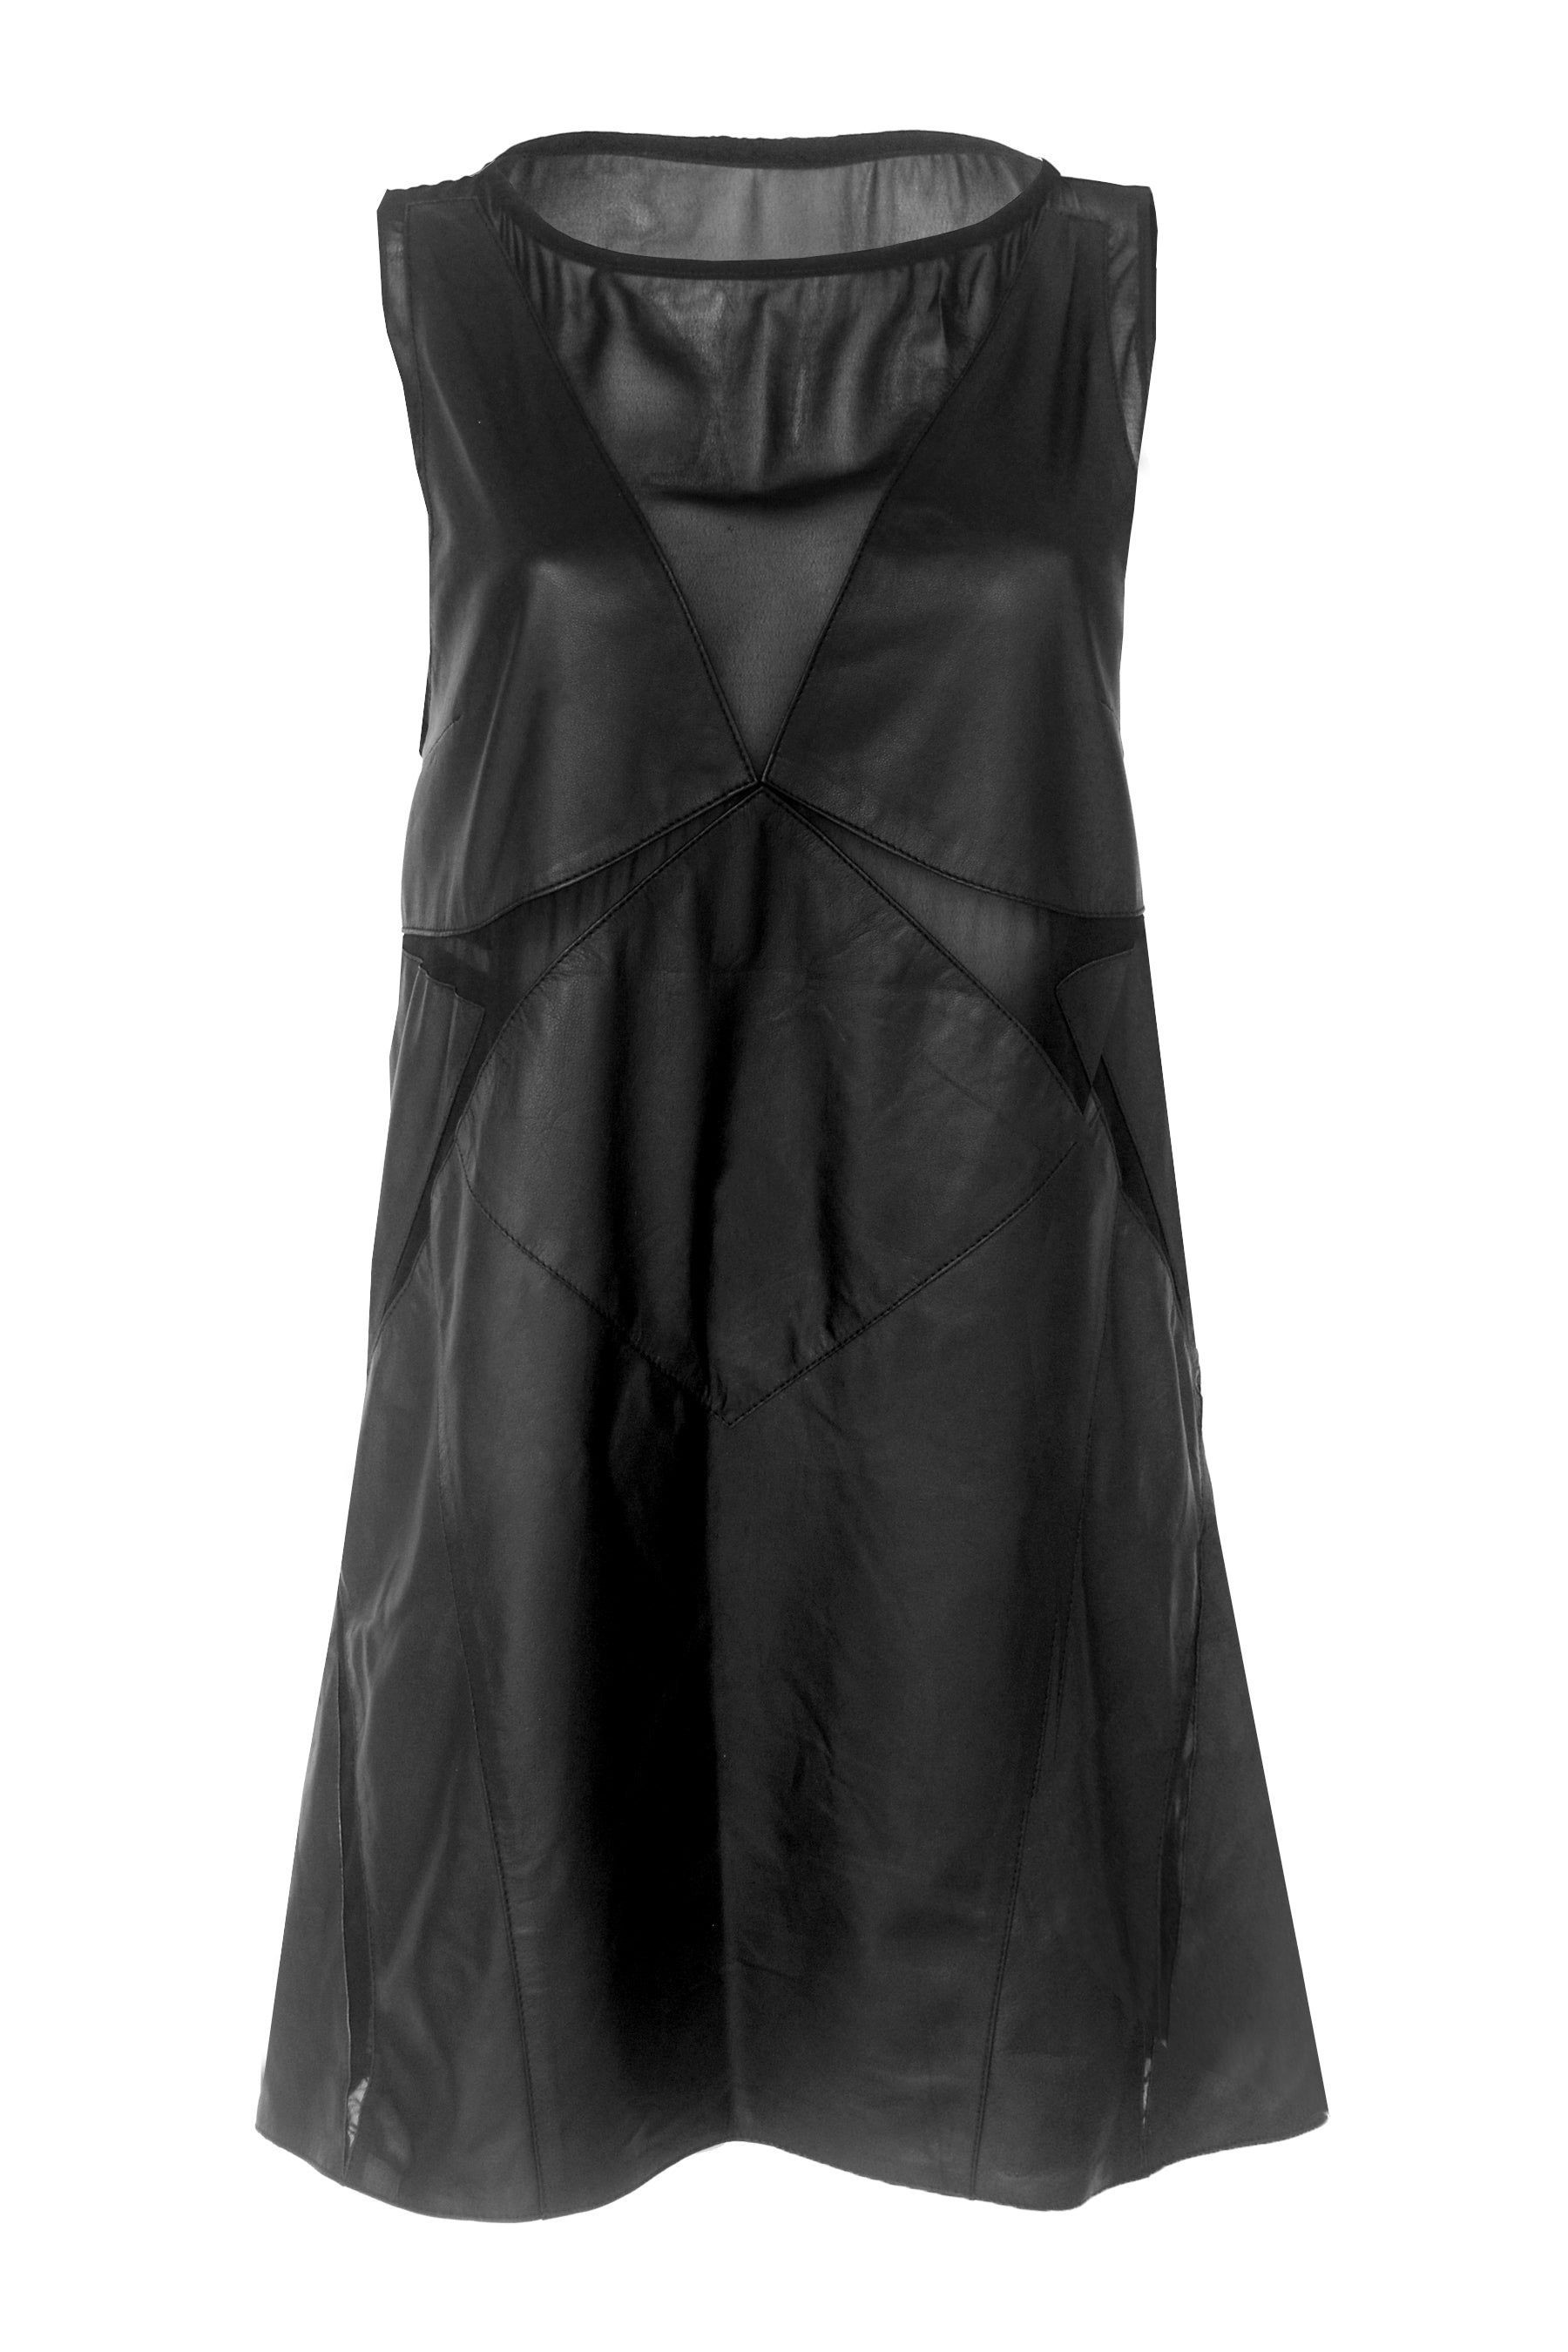 KIERA LEATHER SHIFT DRESS - BLACK